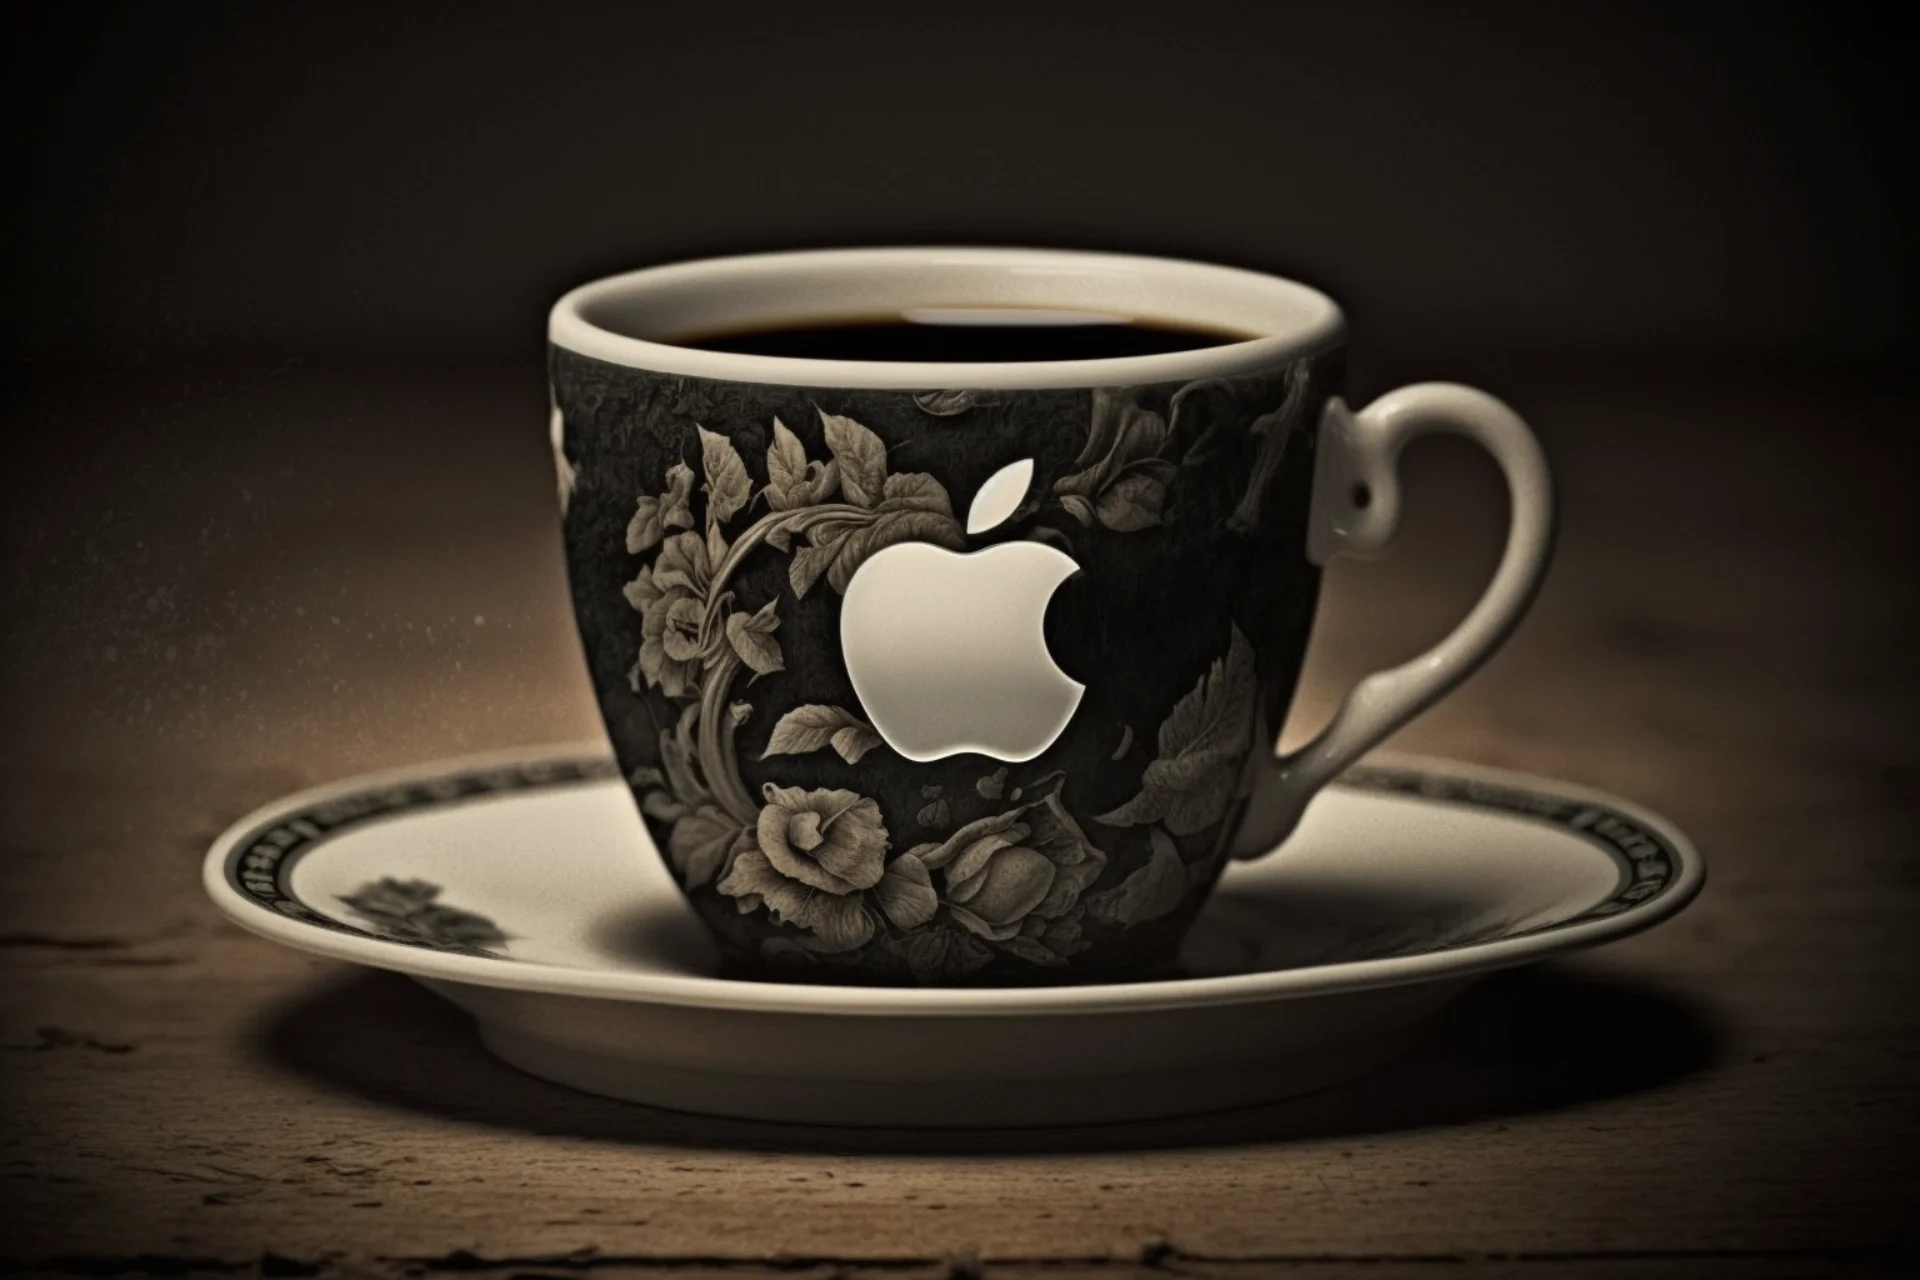 Manu23 a cup of coffee with the Apple Company logo on it 8fd04b2c 11bb 4d71 b46e 22e4a1395791